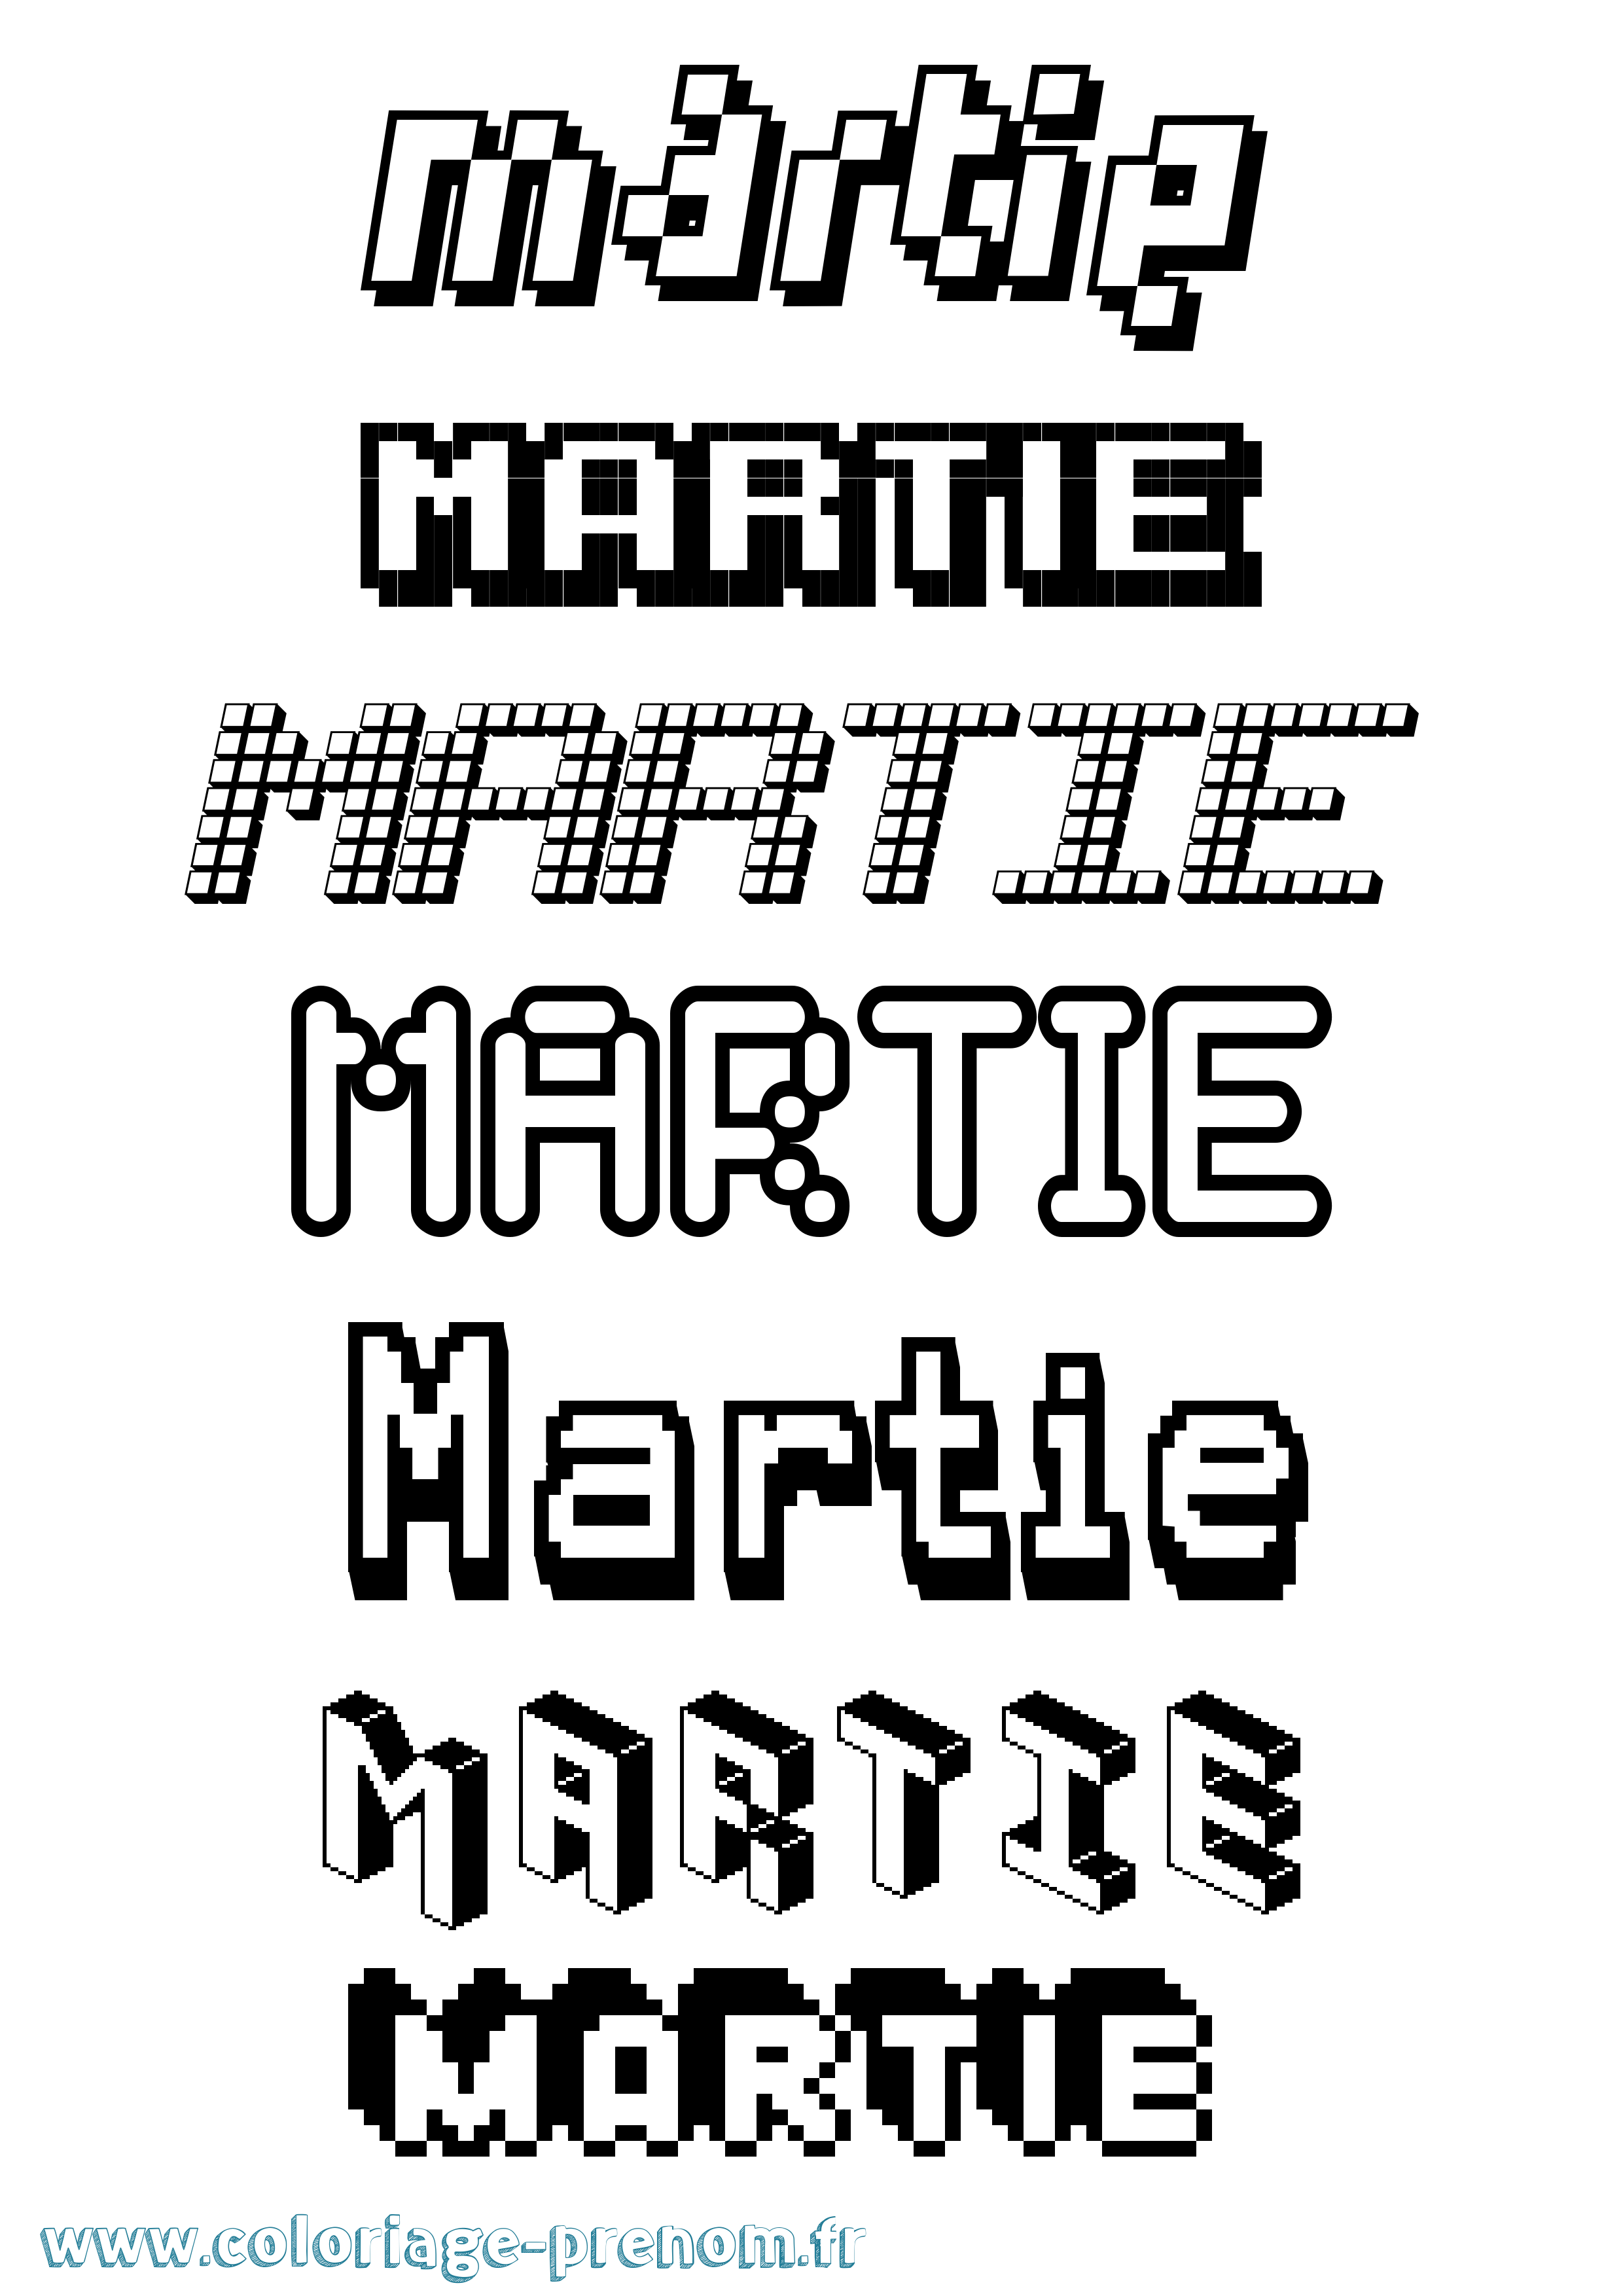 Coloriage prénom Martie Pixel